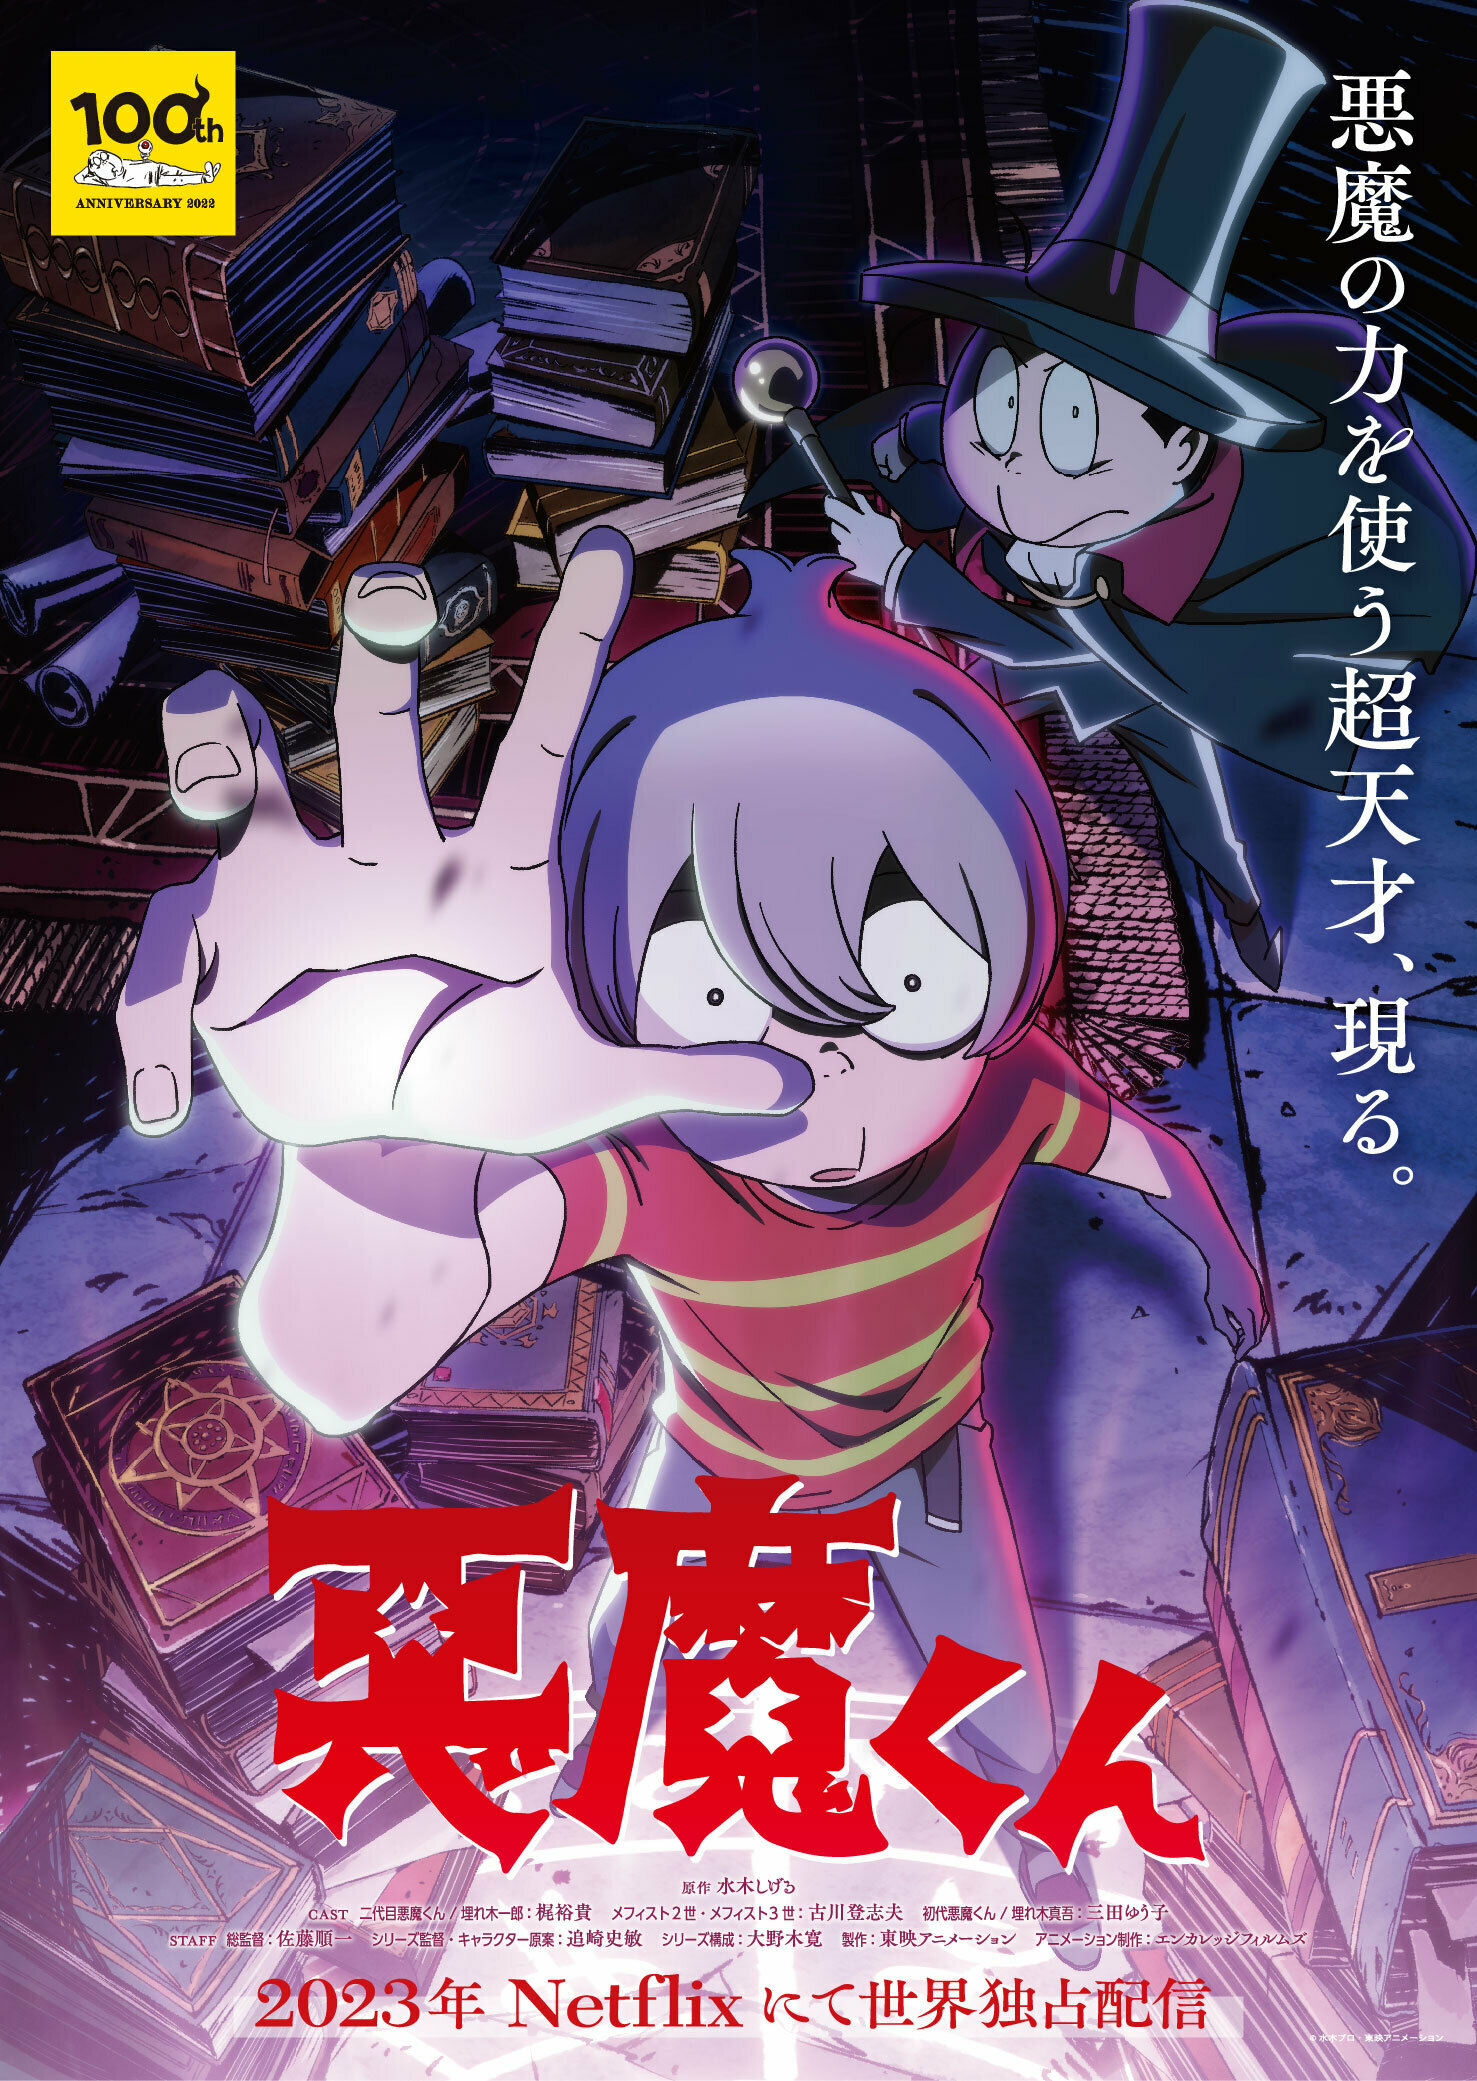 Sinopsis Anime Akuma Kun! Serial Netflix Baru!